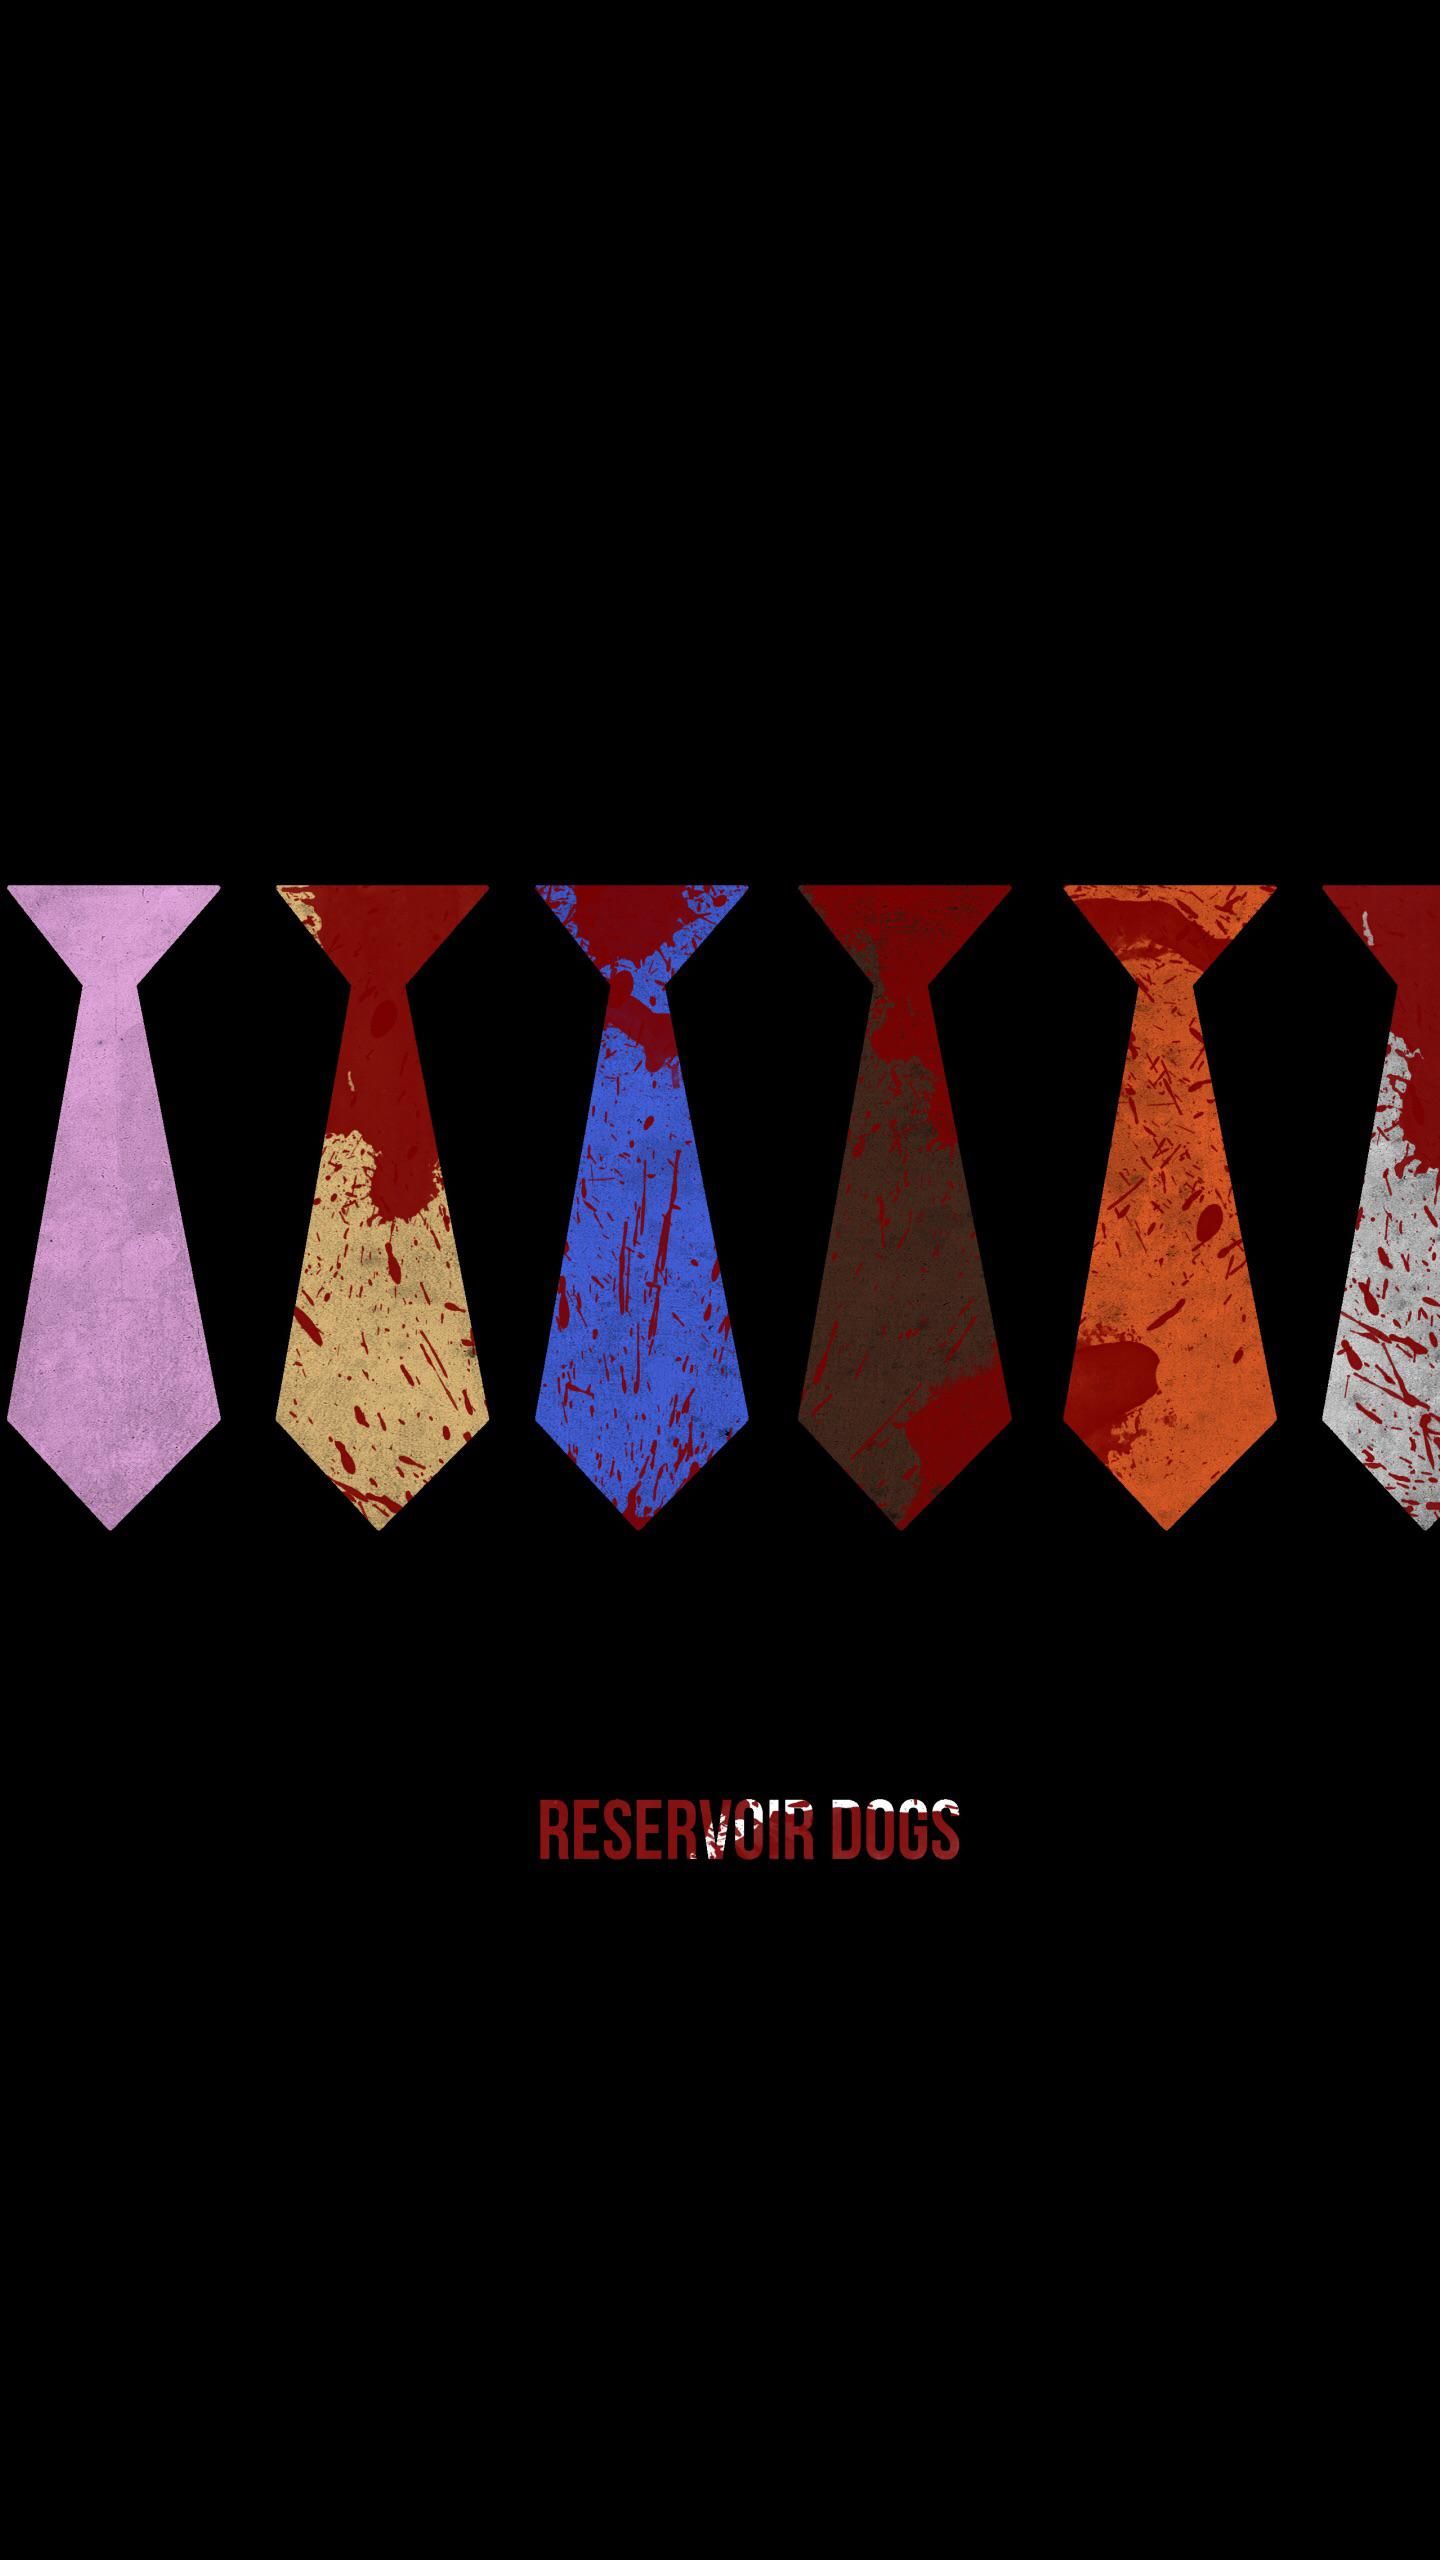 Reservoir Dogs. Reservoir dogs, Reservoir dogs poster, Movie posters design